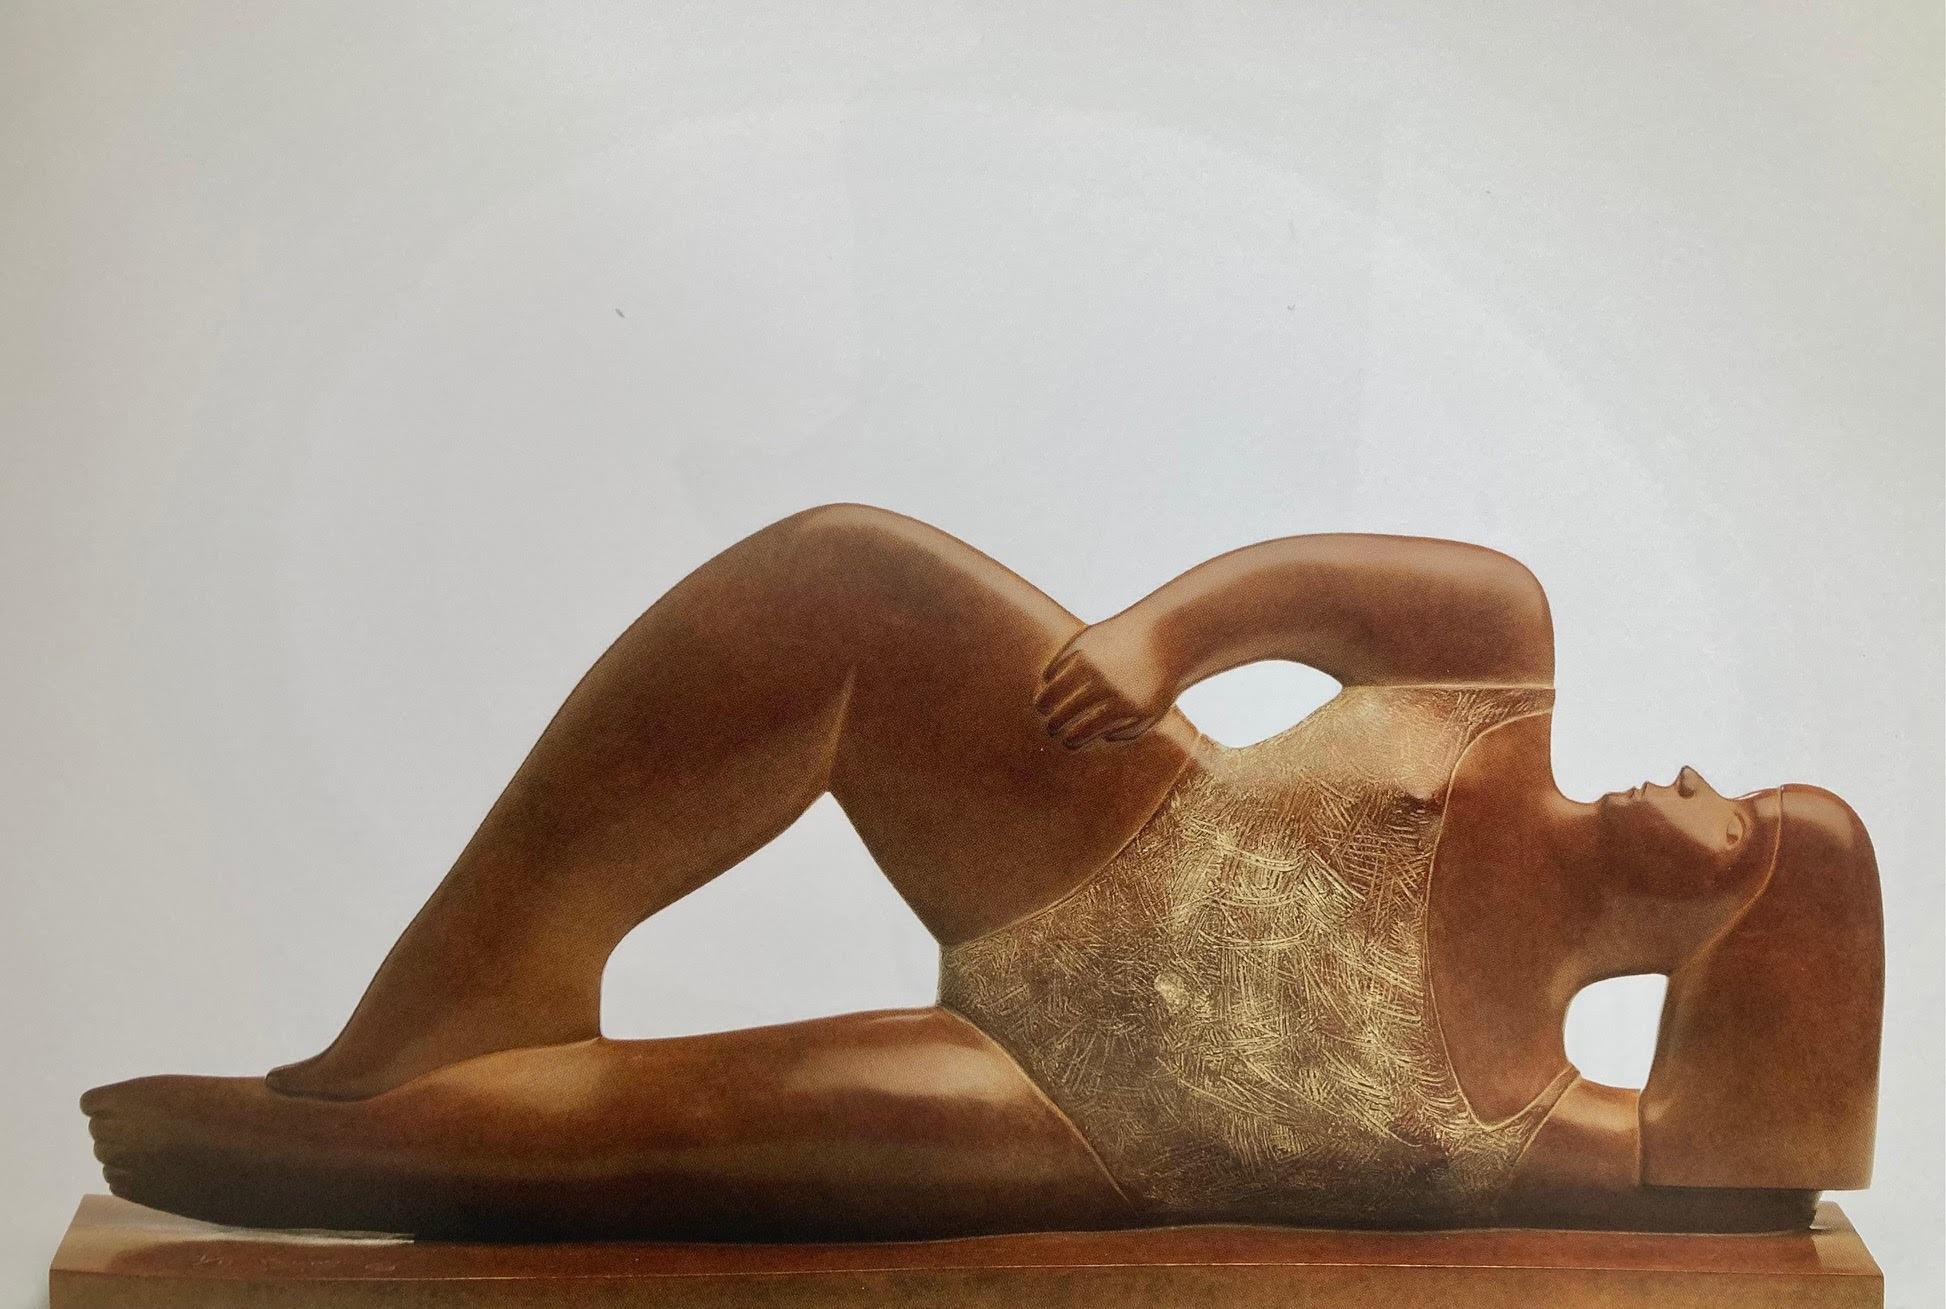 KOBE Figurative Sculpture - Sunbathing Bronze Sculpture Sun Lady Female Figure Bathing Suit